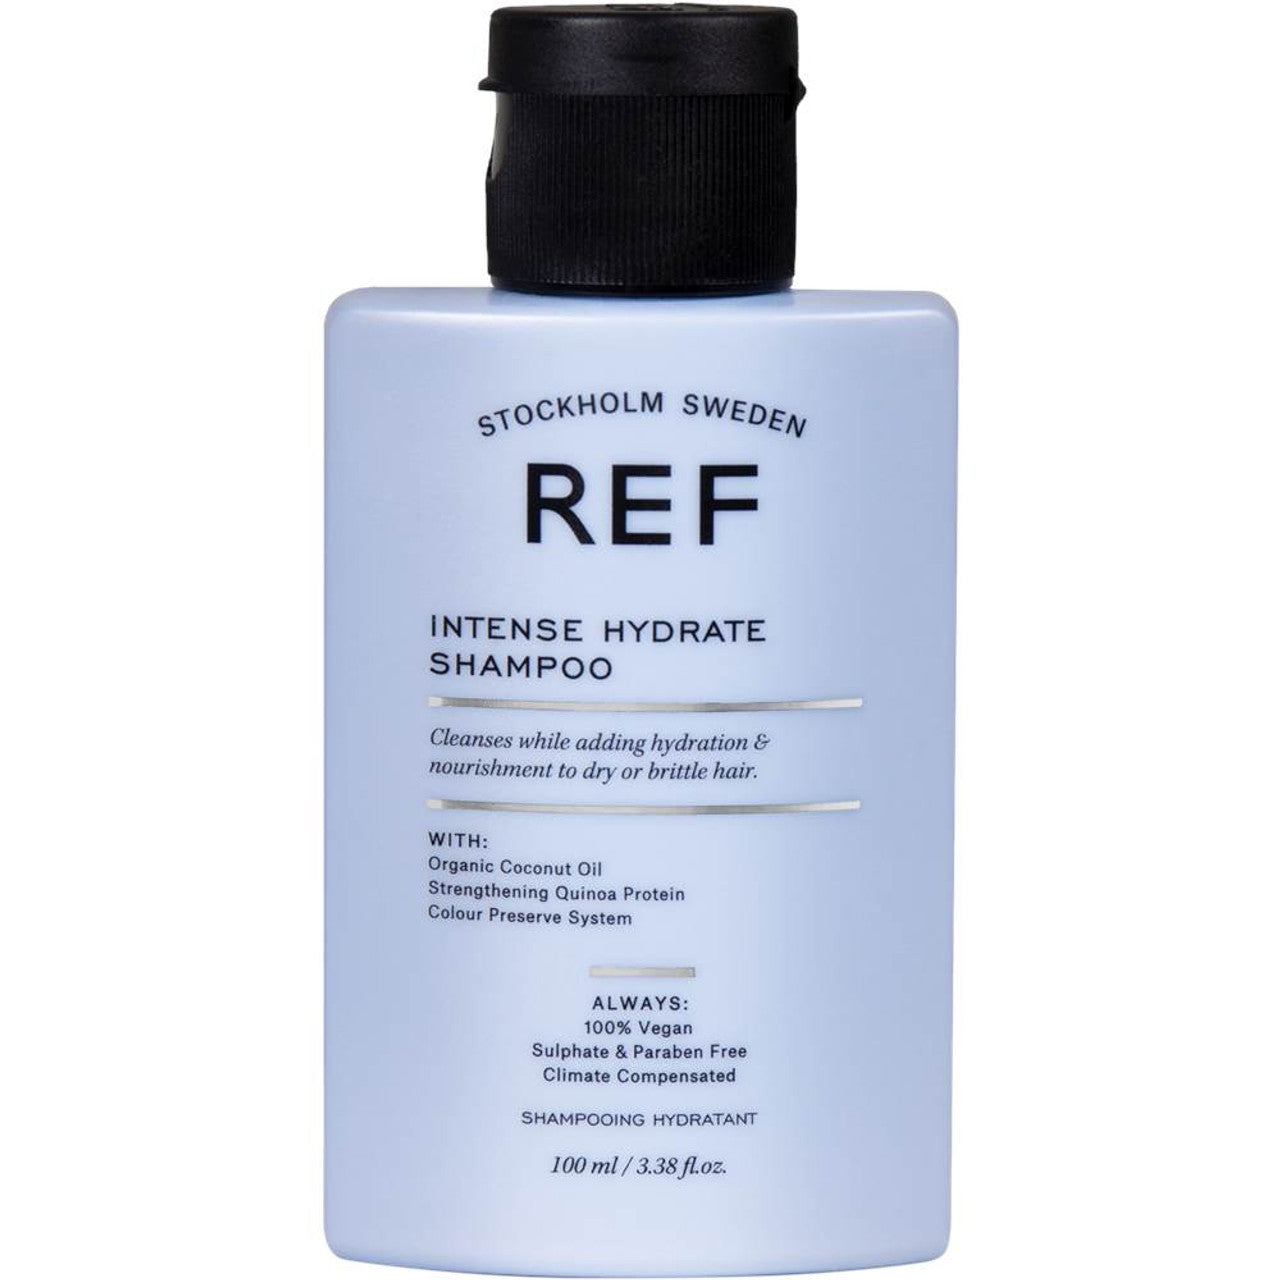 REF - Intense Hydrate Shampoo 100ml